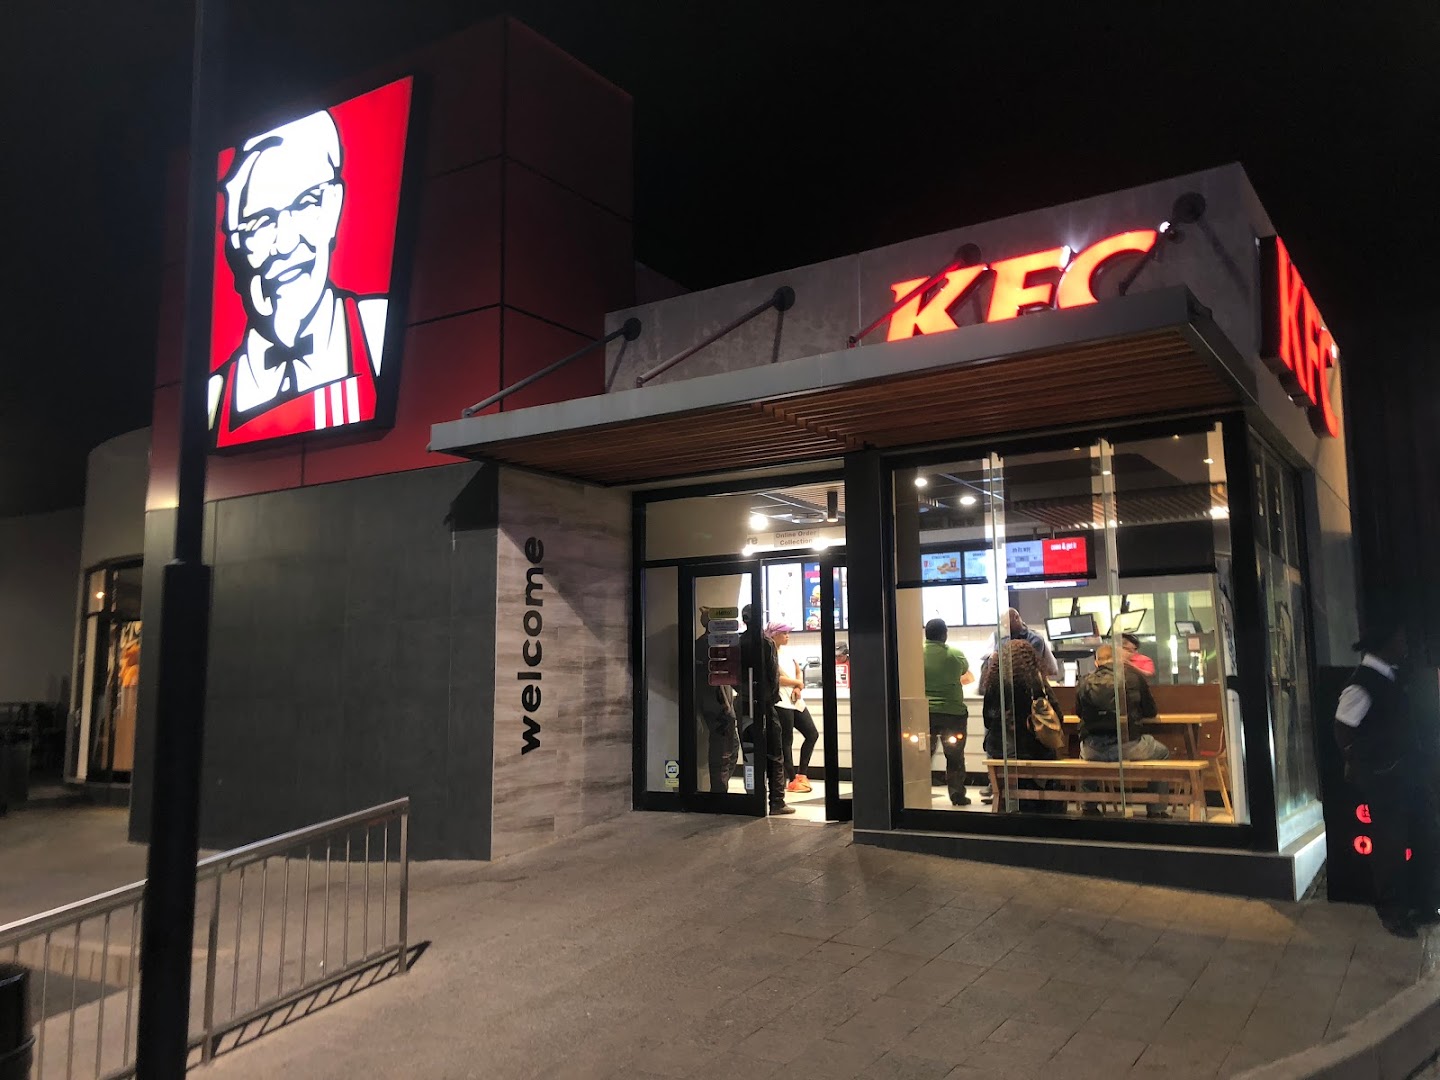 KFC The Reds – Rooihuiskraal